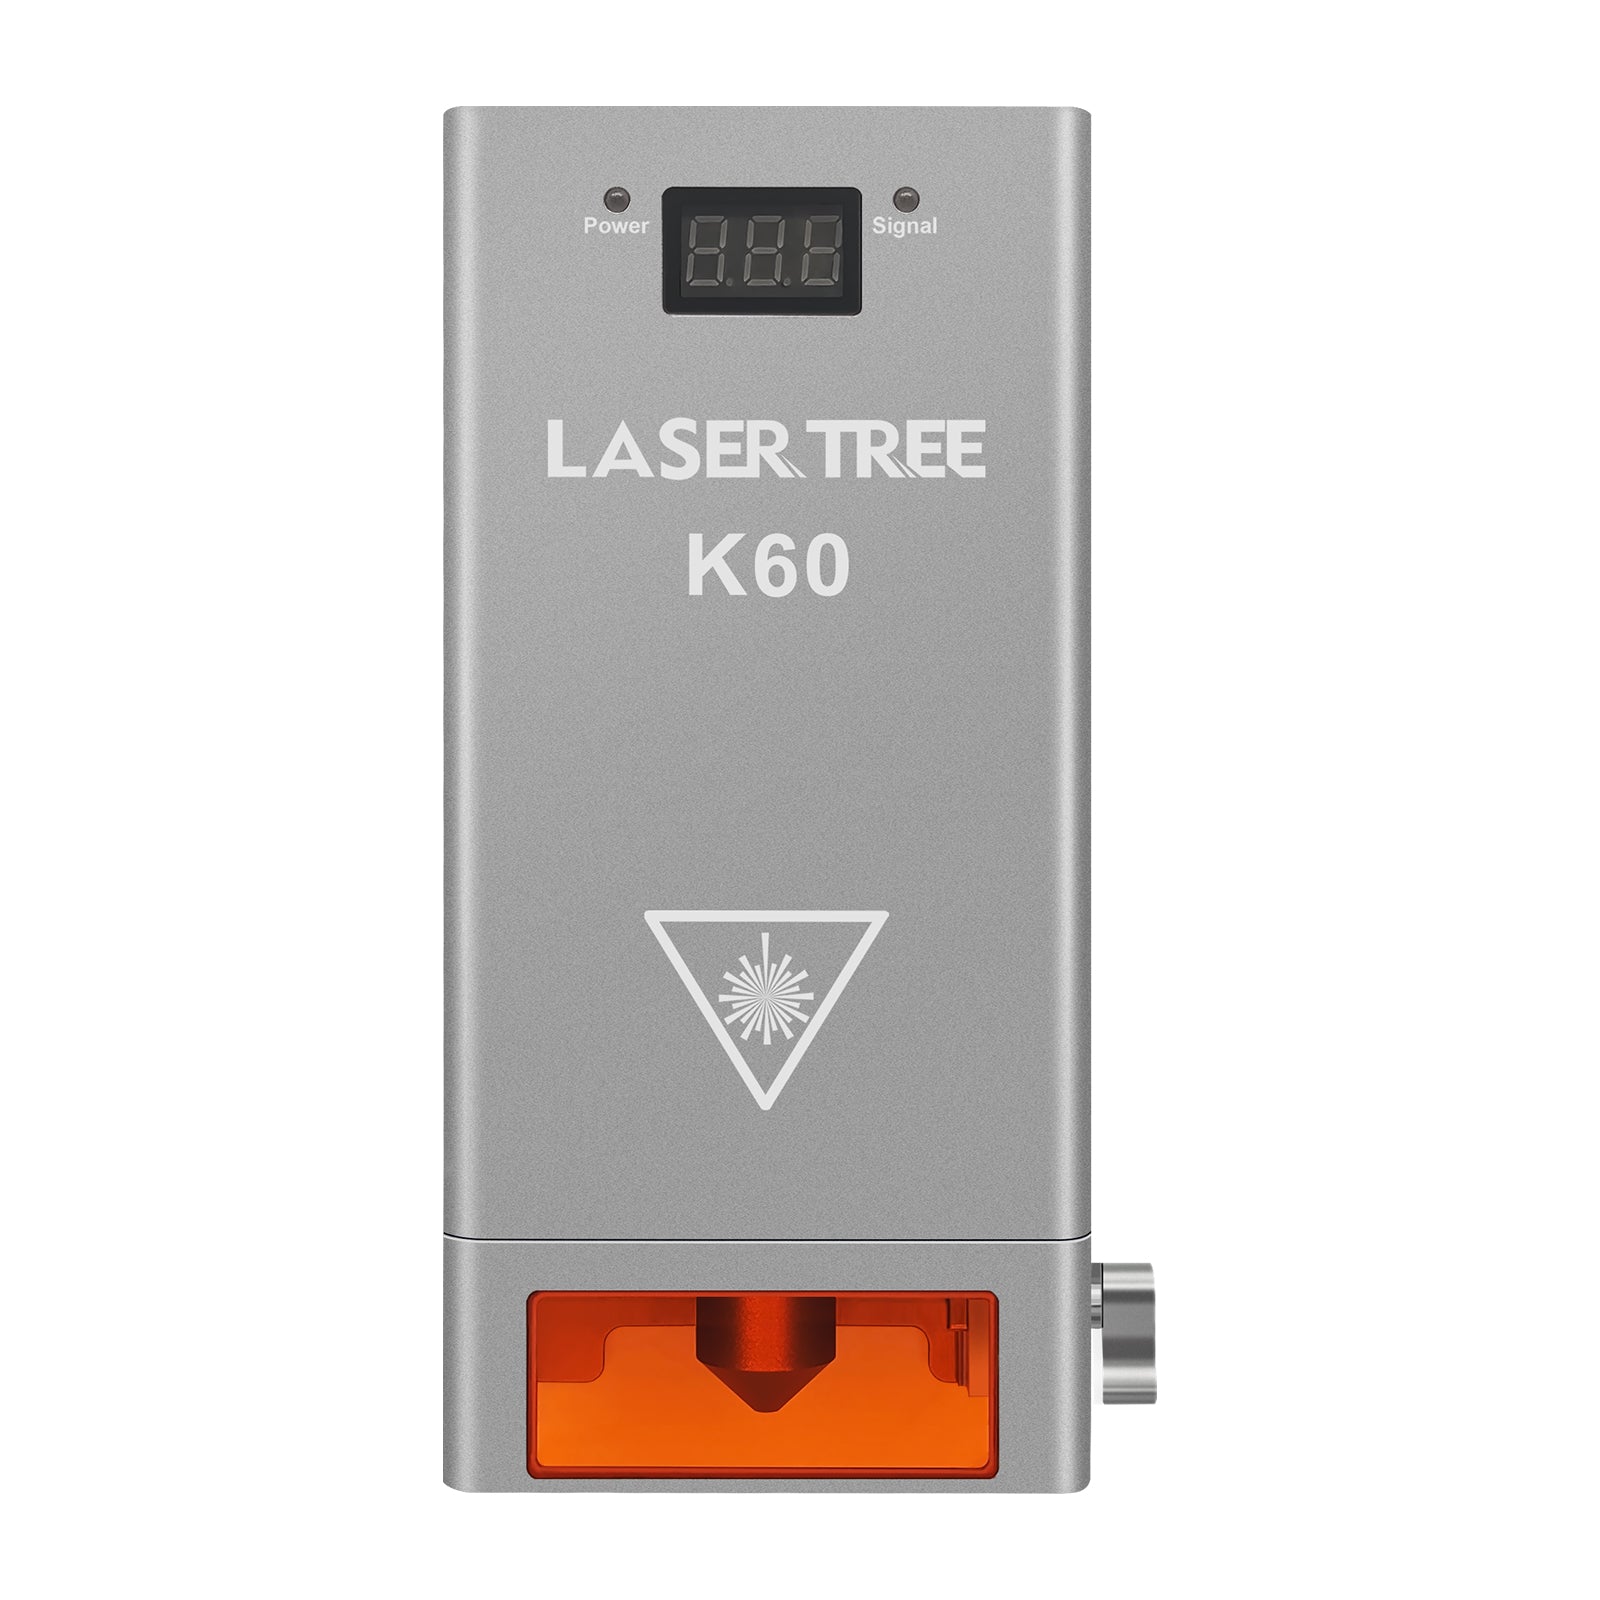 [Early Bird Price] Lasertree K60 60W/40W/20W Power Switchable Laser Module